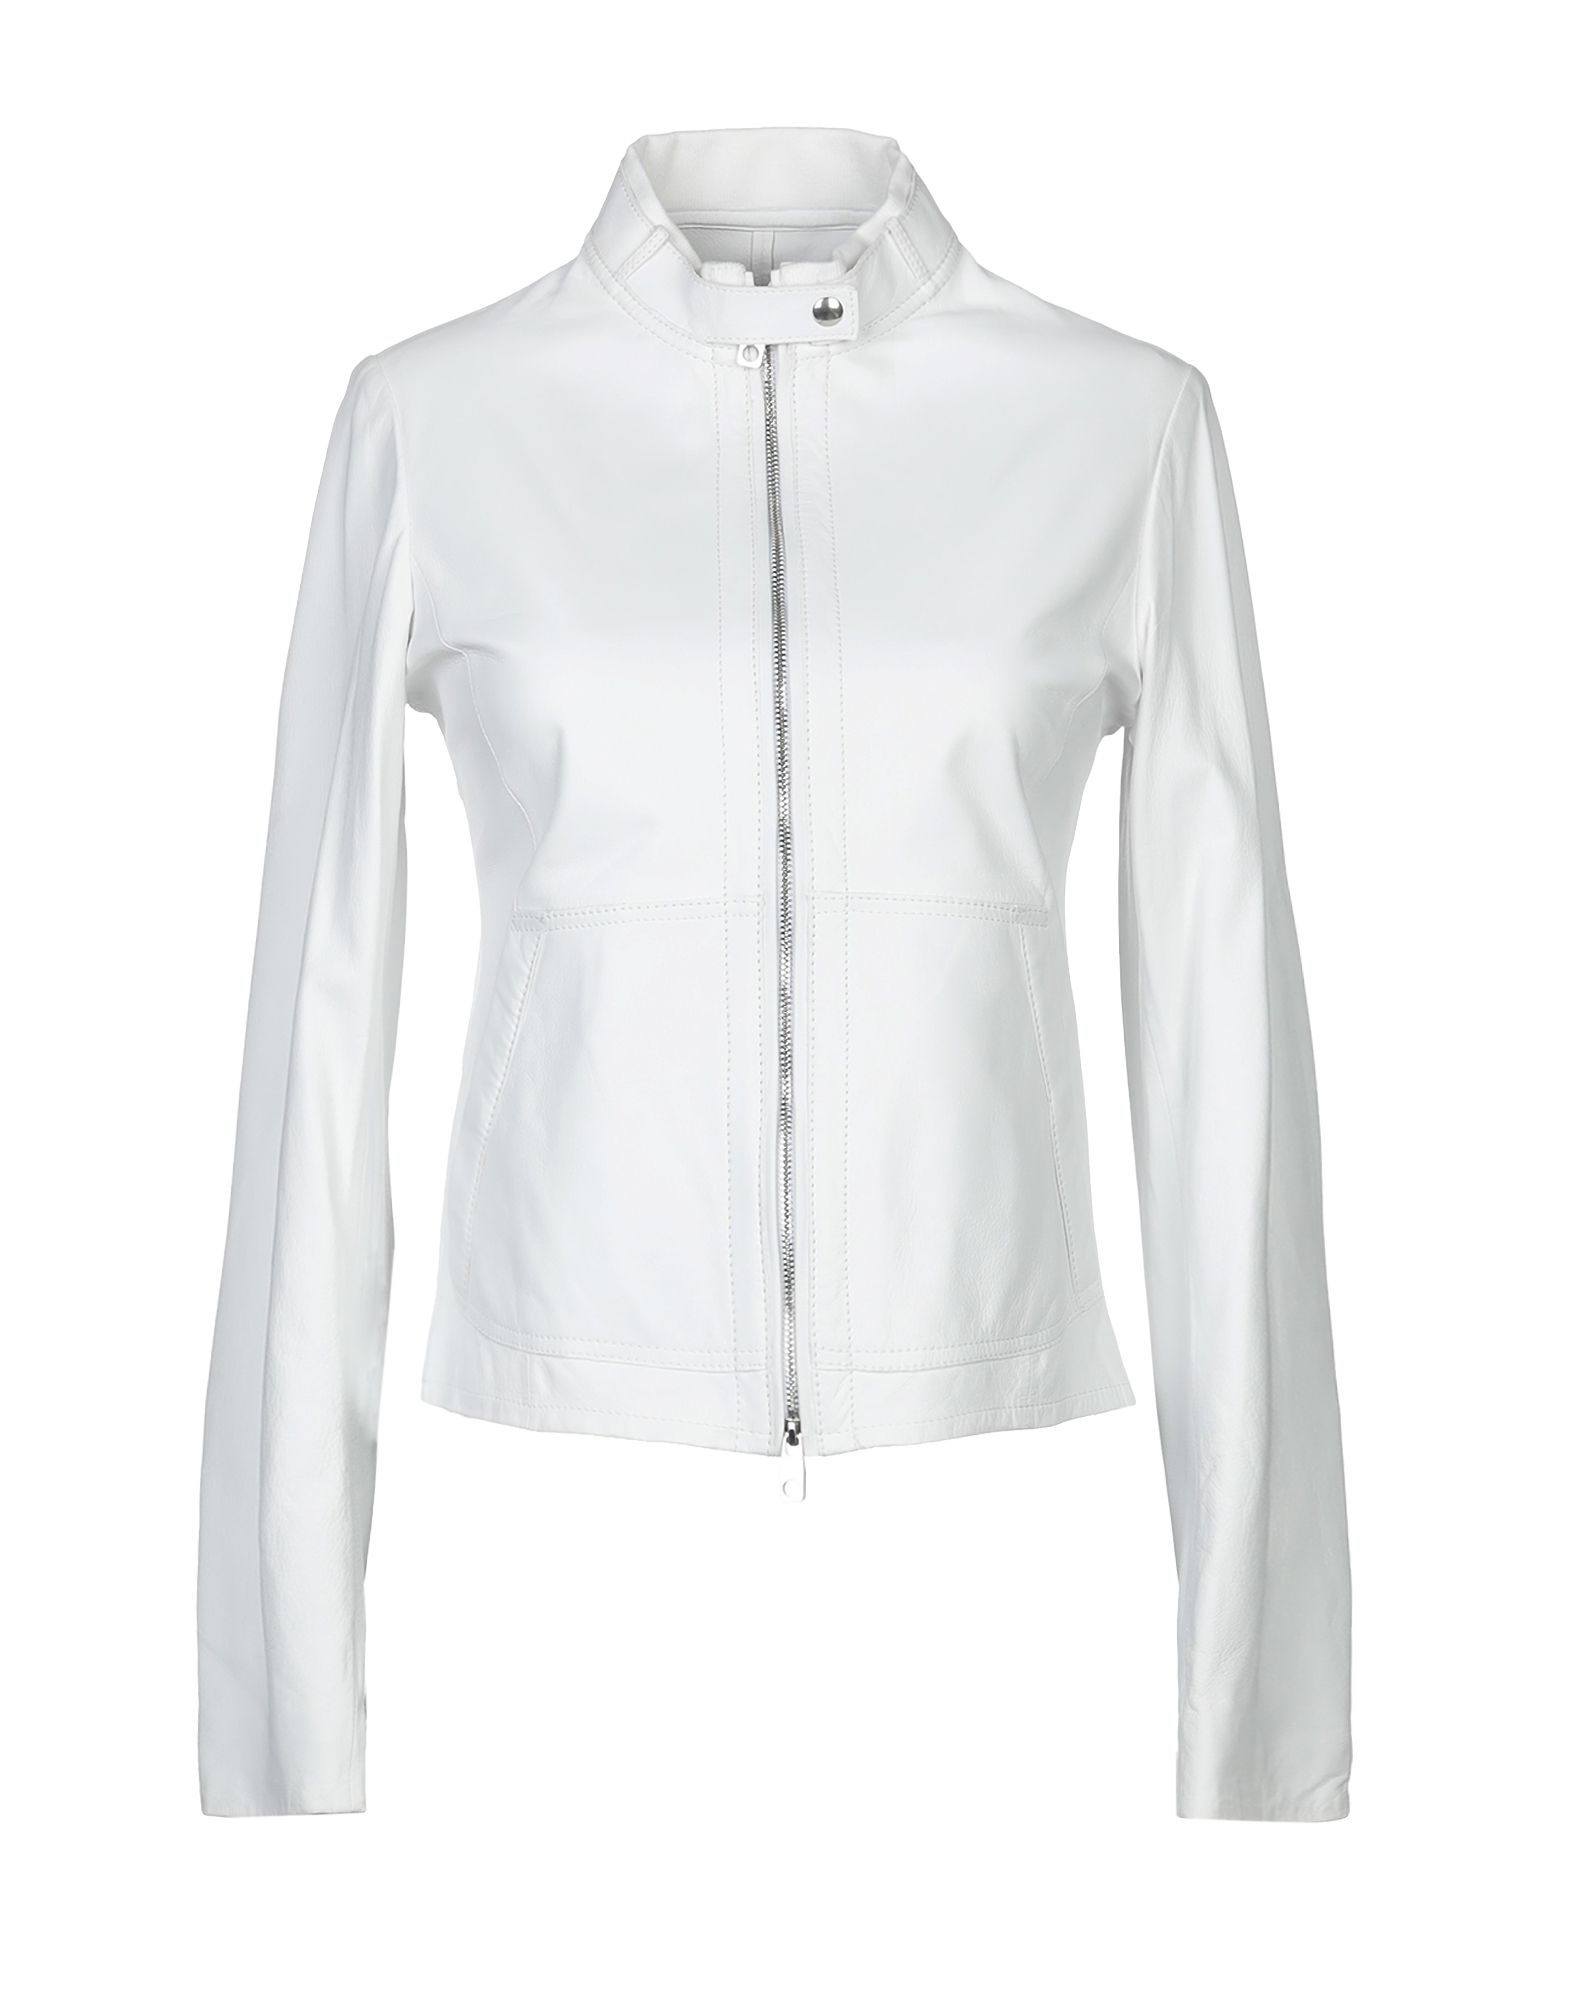 armani jacket white